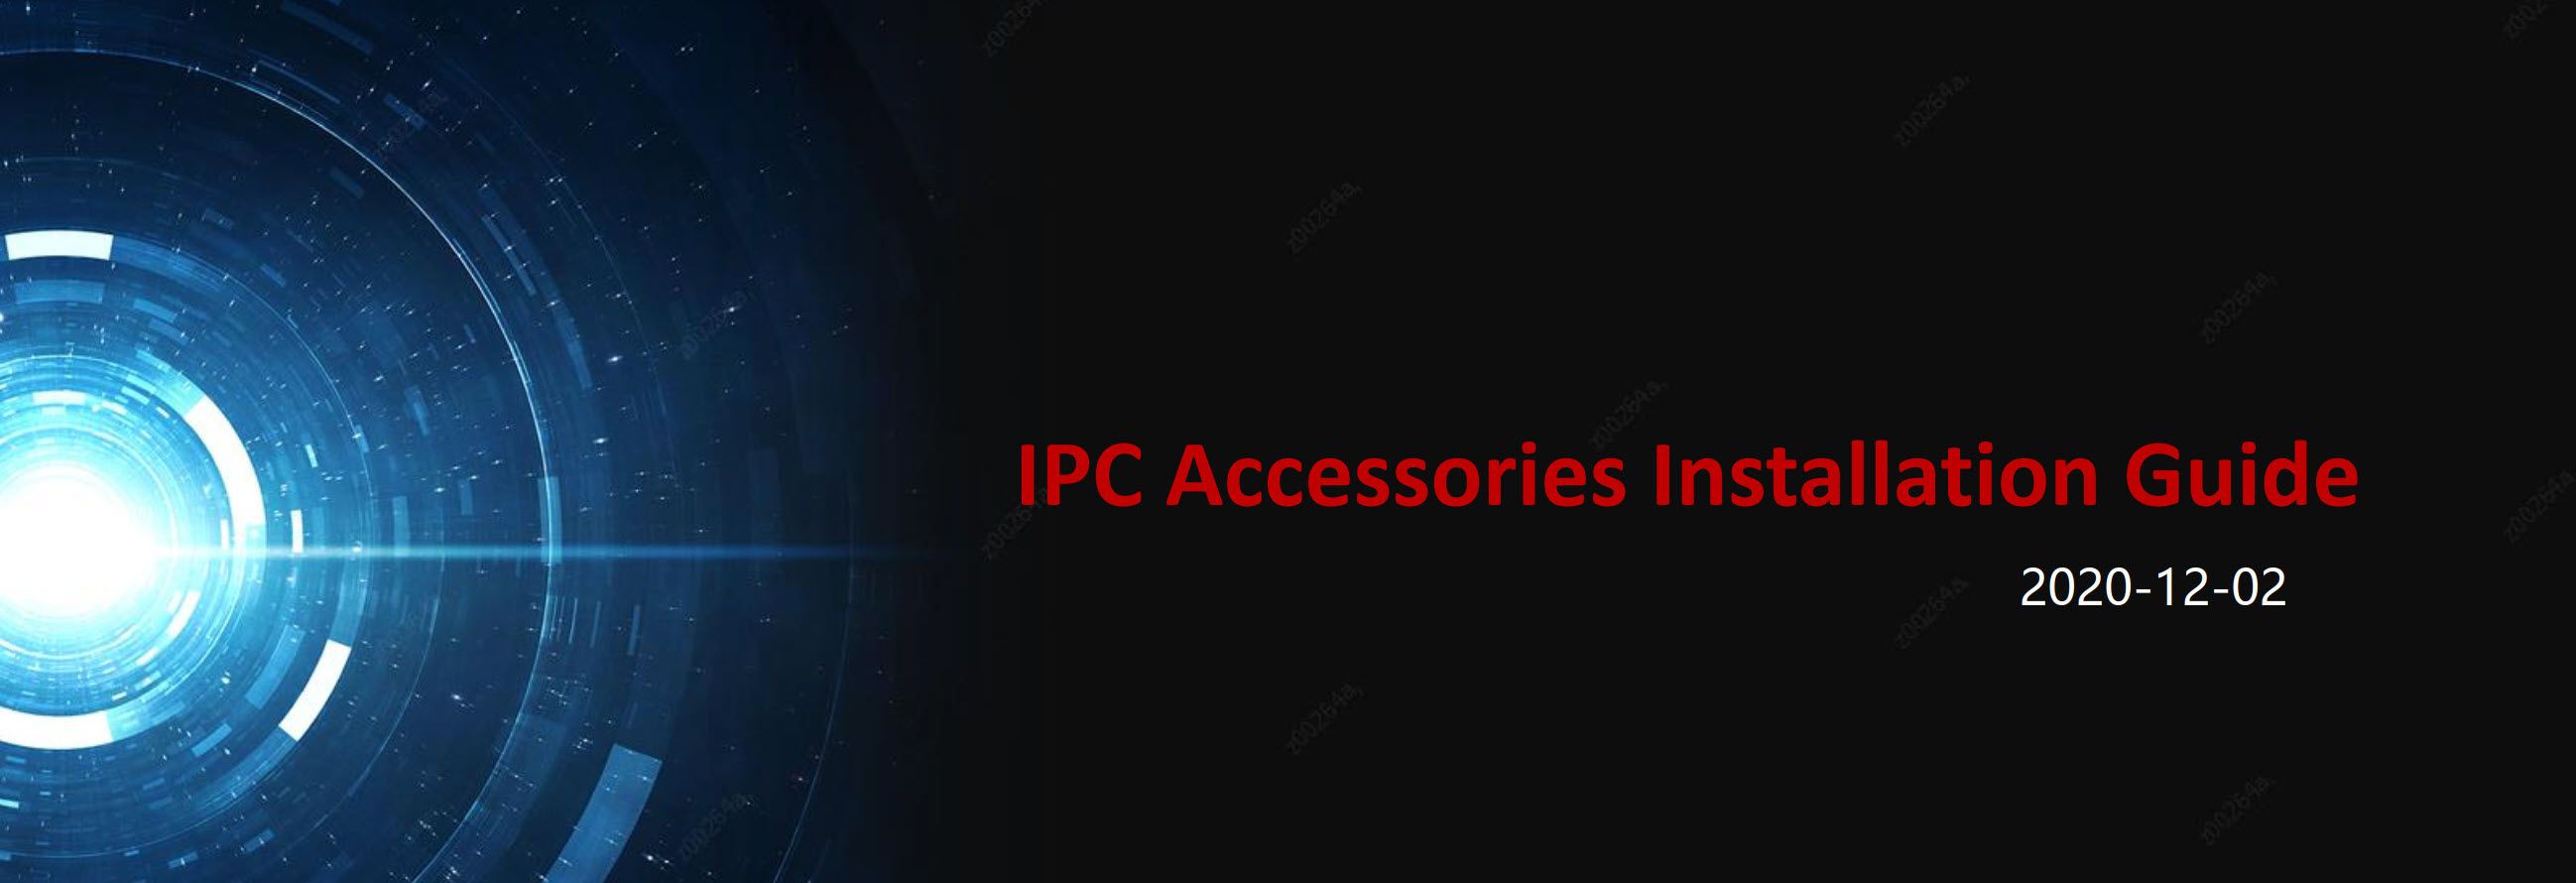 ipc-accessories.jpg